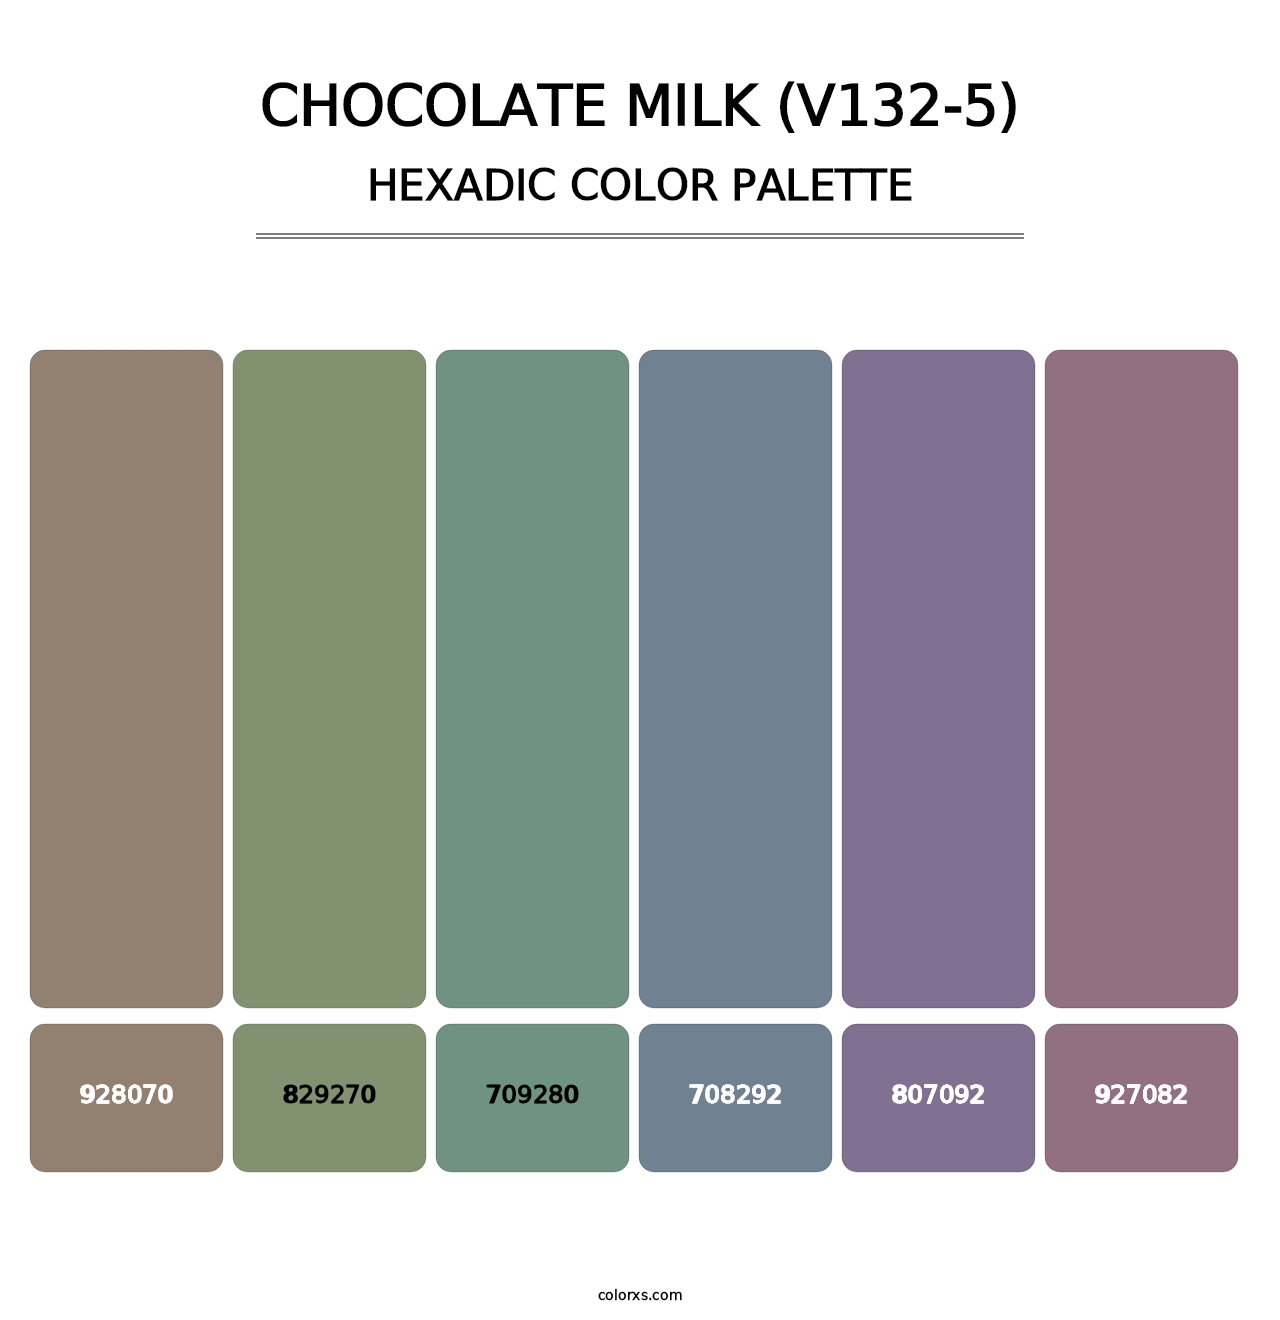 Chocolate Milk (V132-5) - Hexadic Color Palette